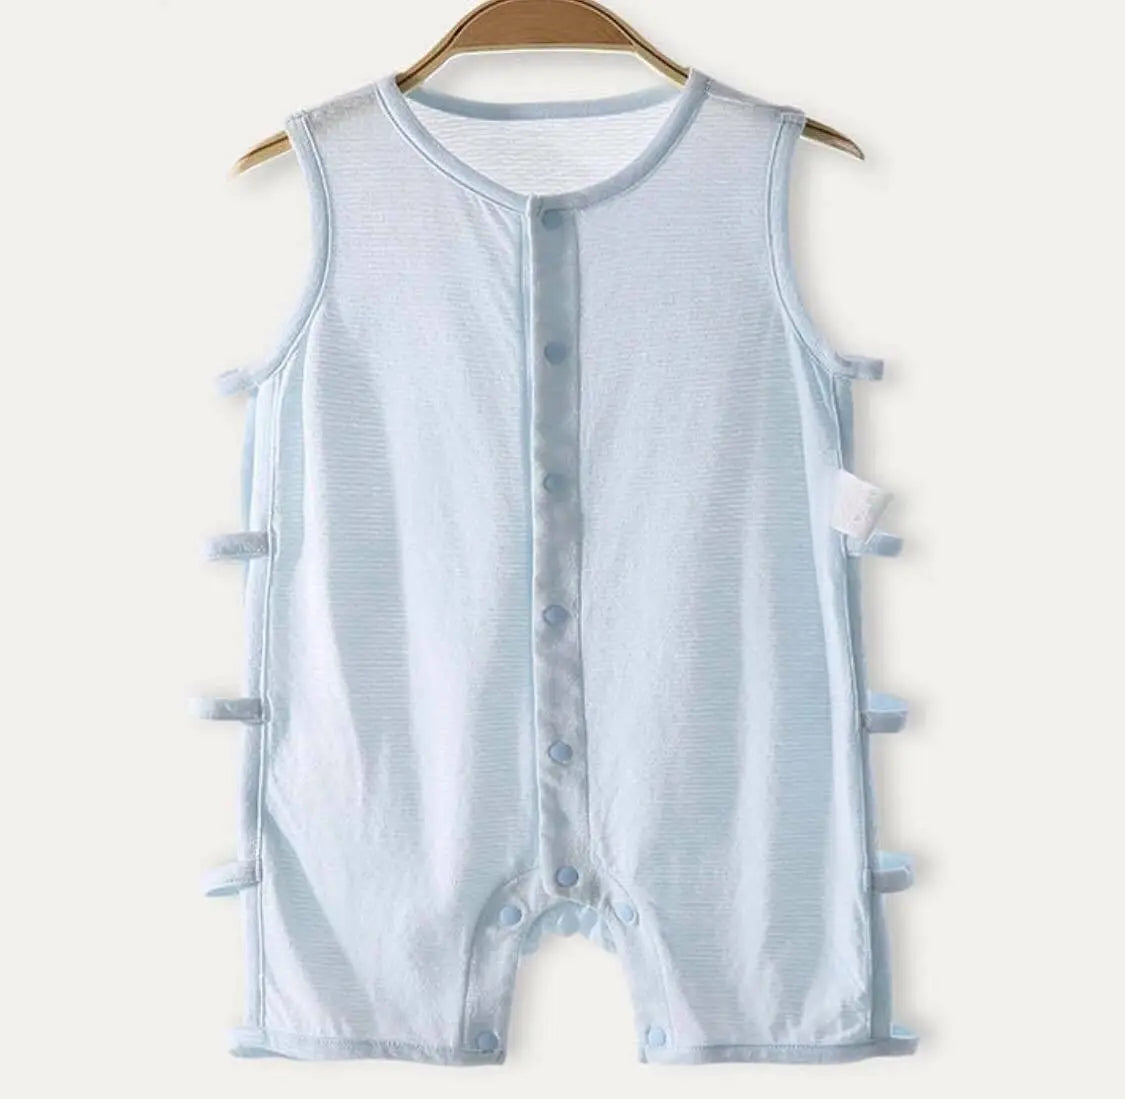 Bamboo Fiber Babysuit One Piece Jumpsuit Sleepwear Comfortable Breathable Soft everythingbamboo